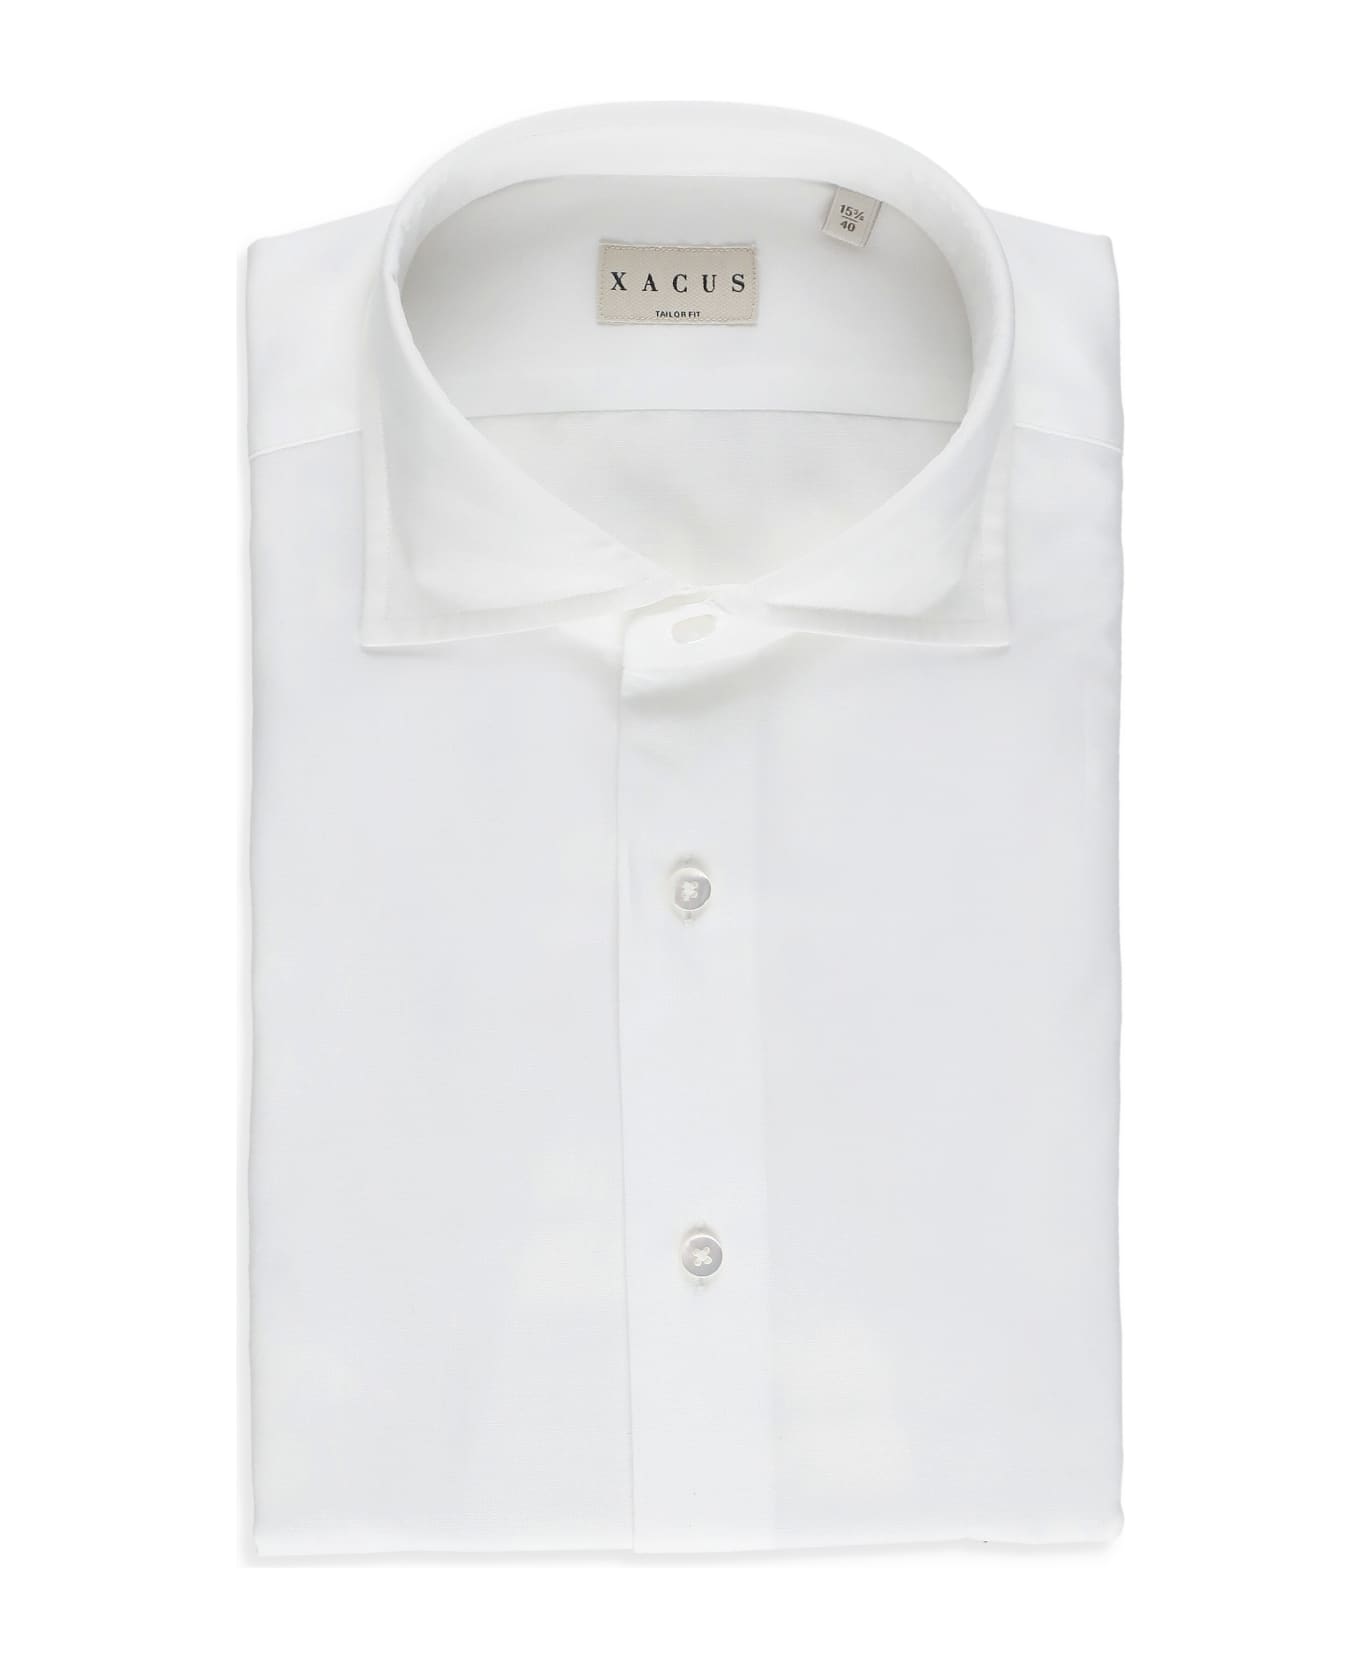 Xacus Tailor Shirt - White